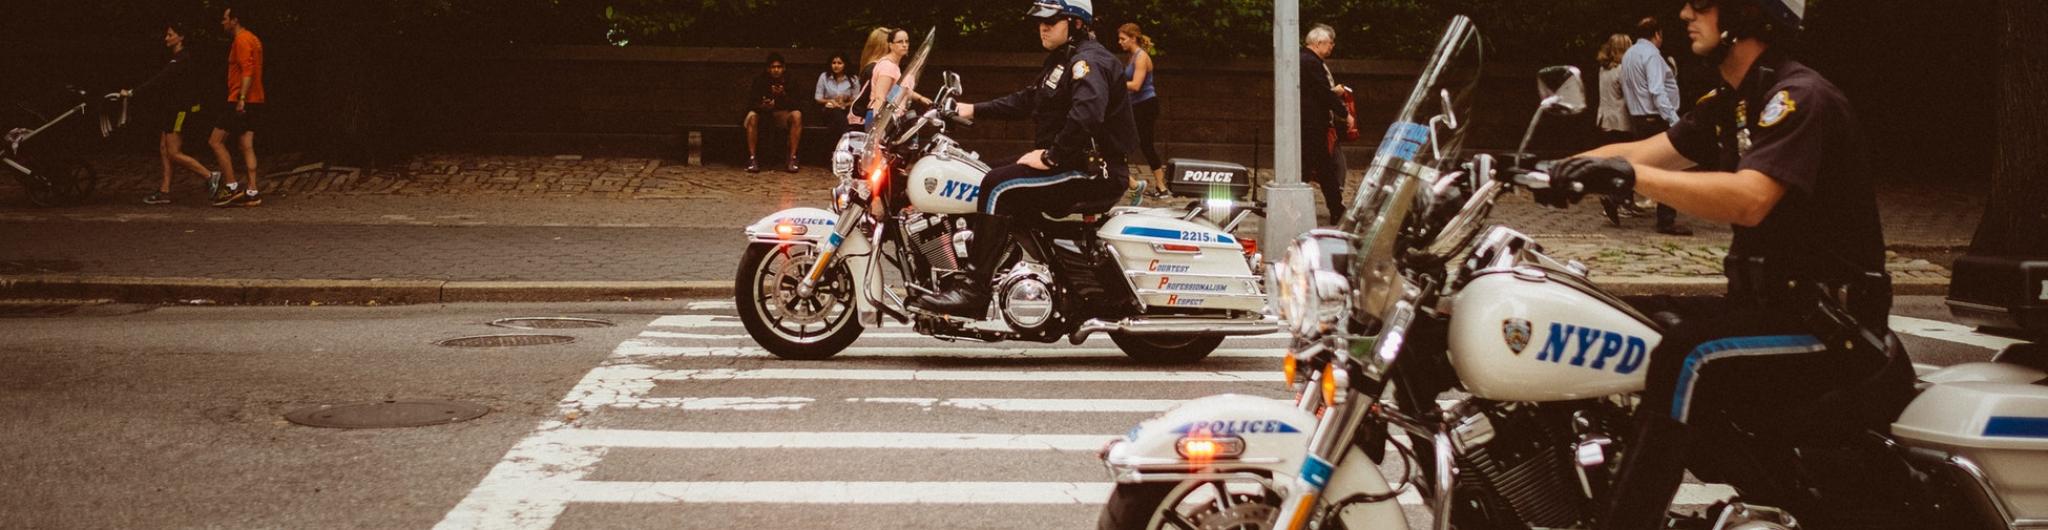 Police officer on a bike